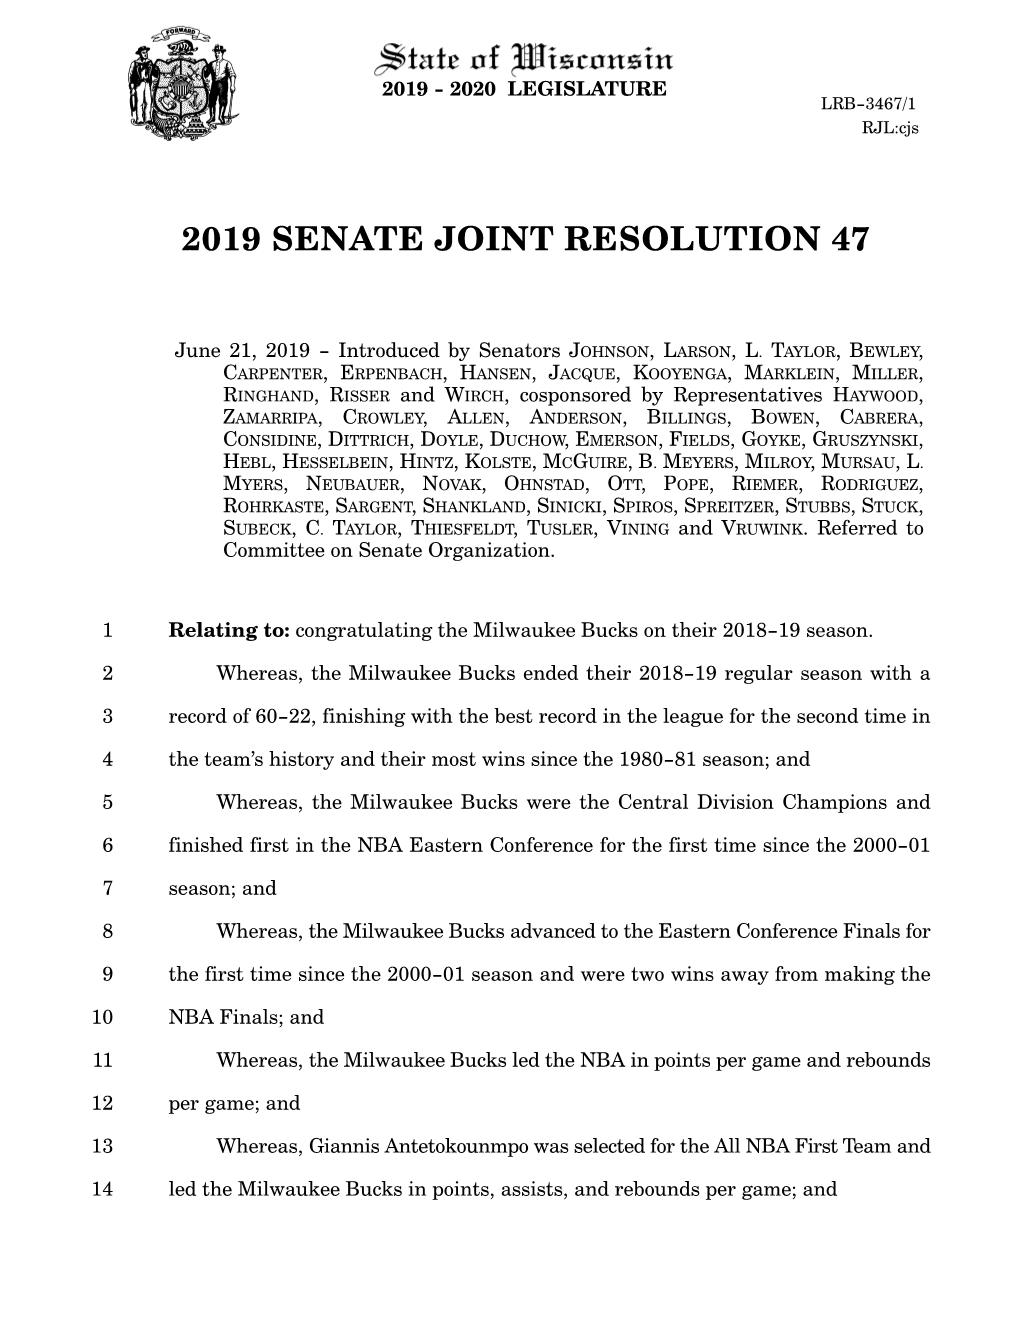 2019 Senate Joint Resolution 47